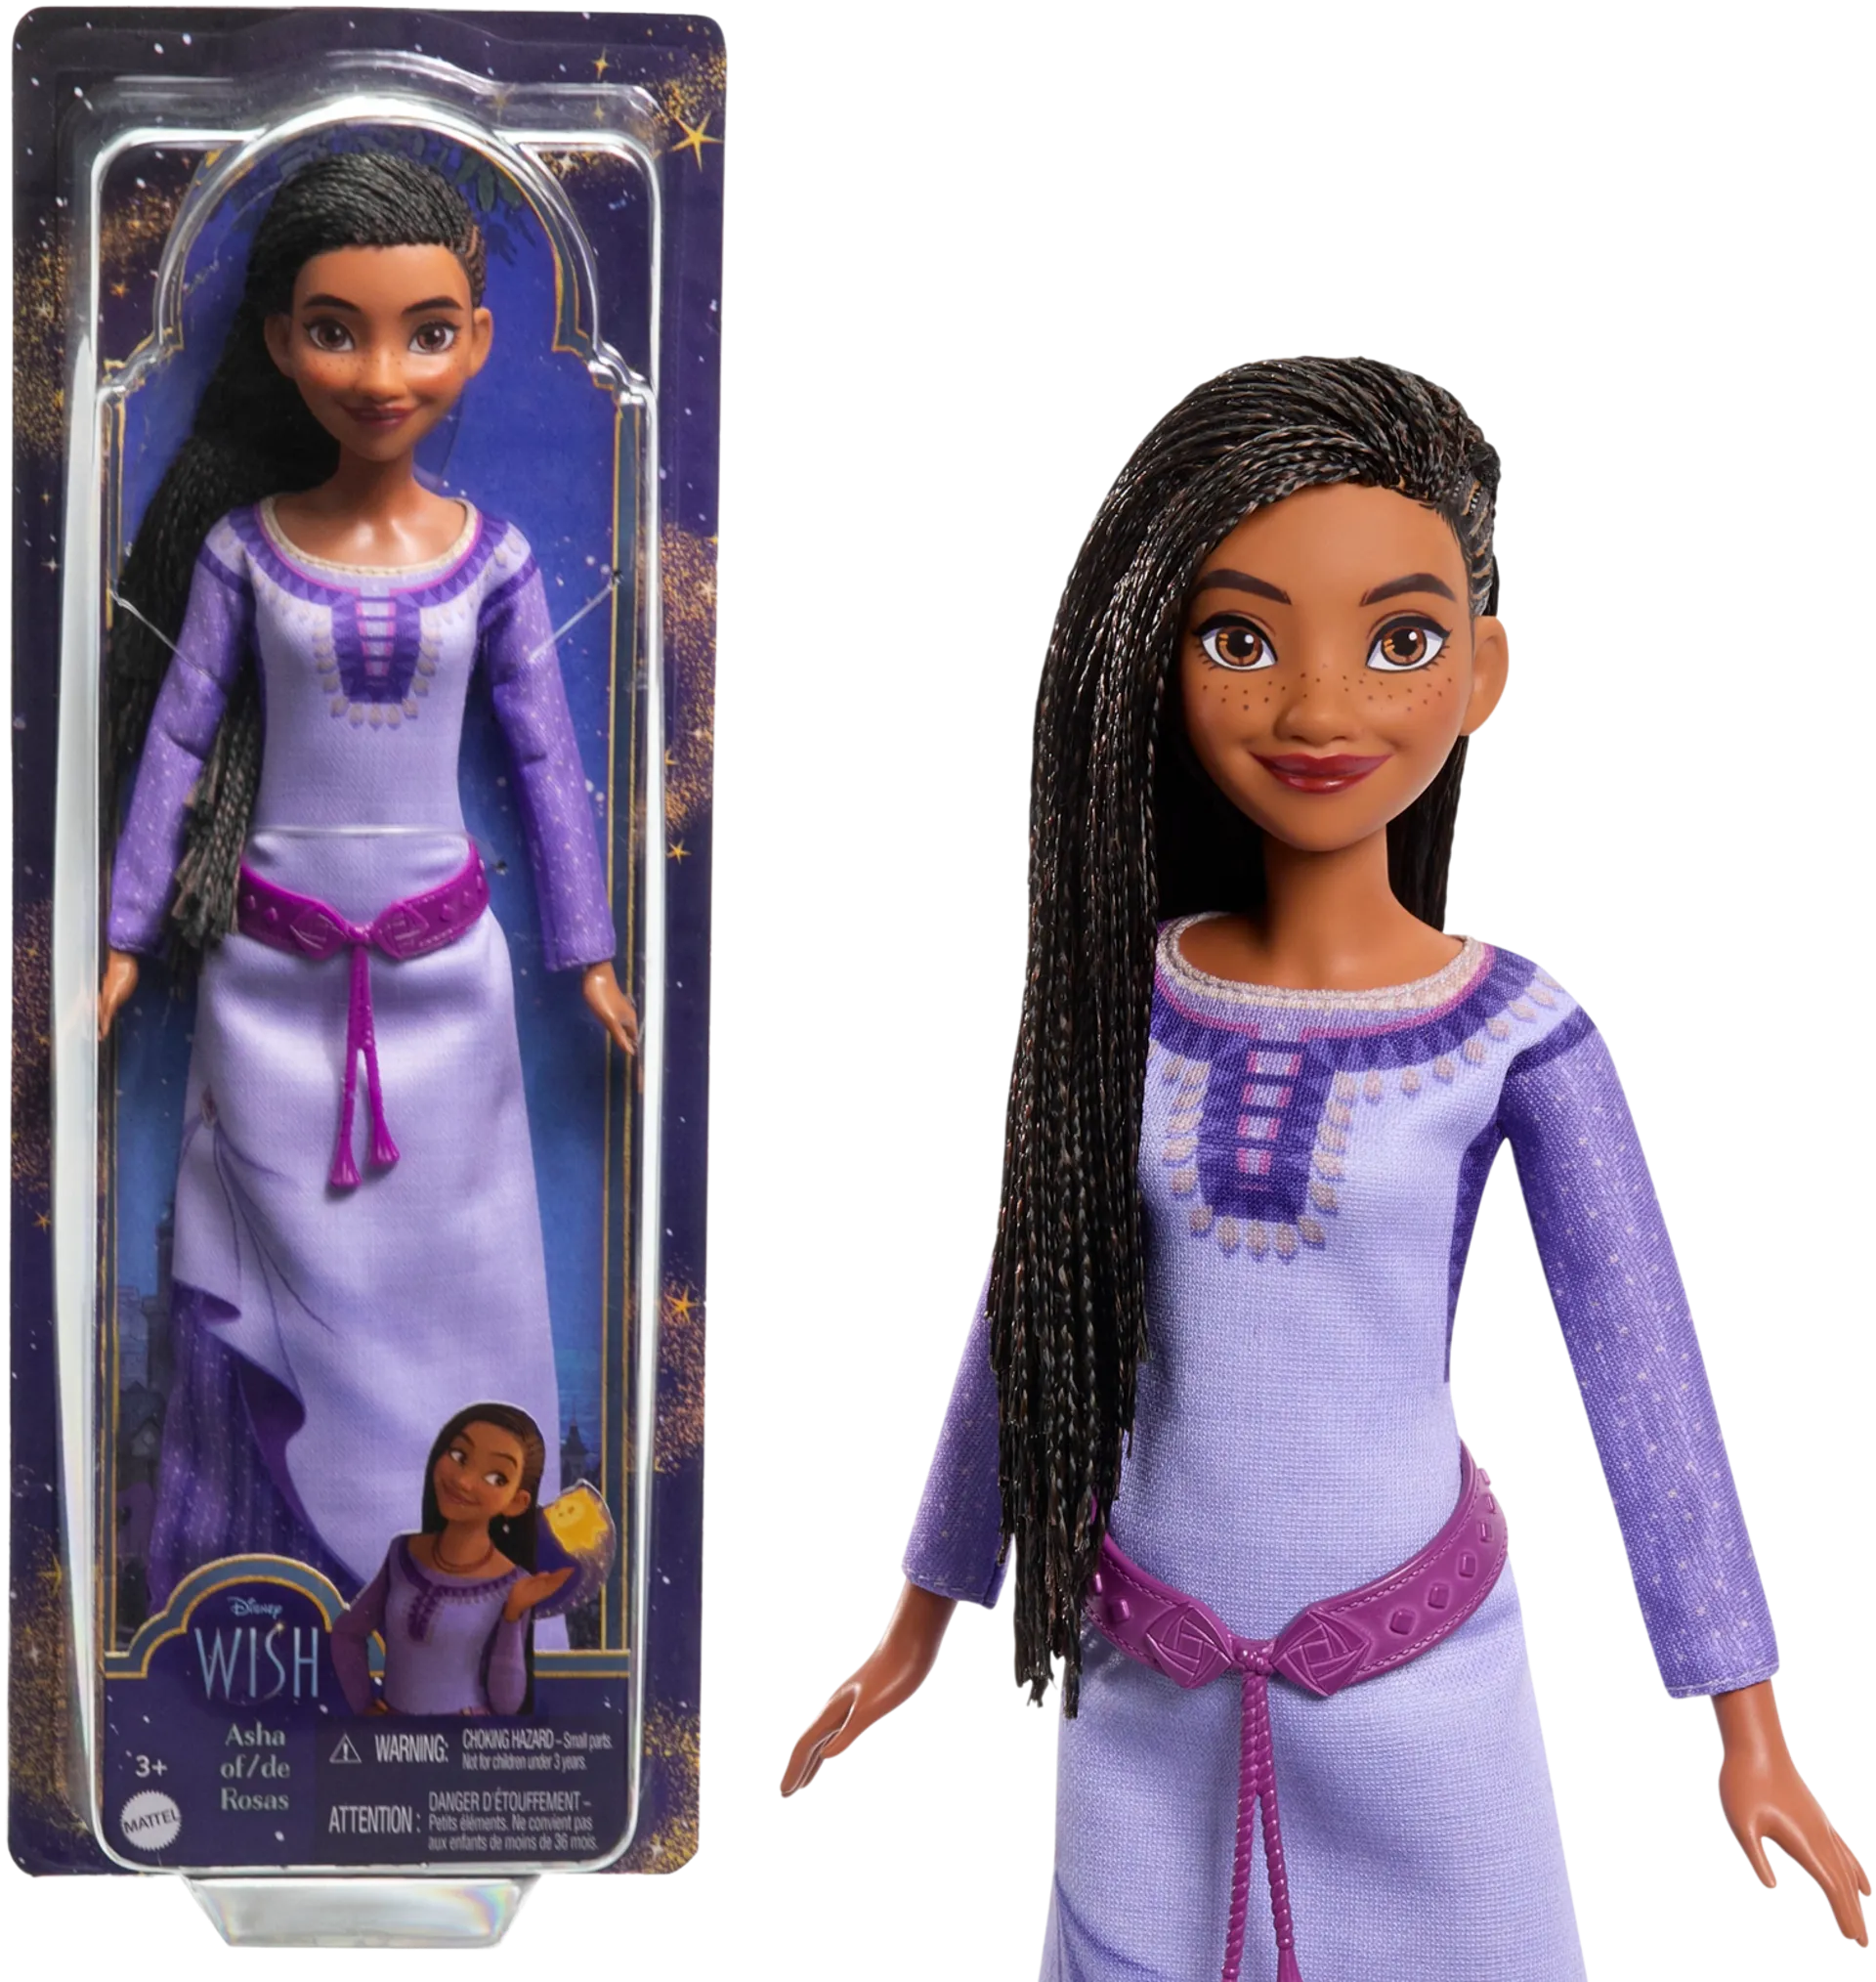 Disney Princess Wish Hero Doll Hpx23 - 3